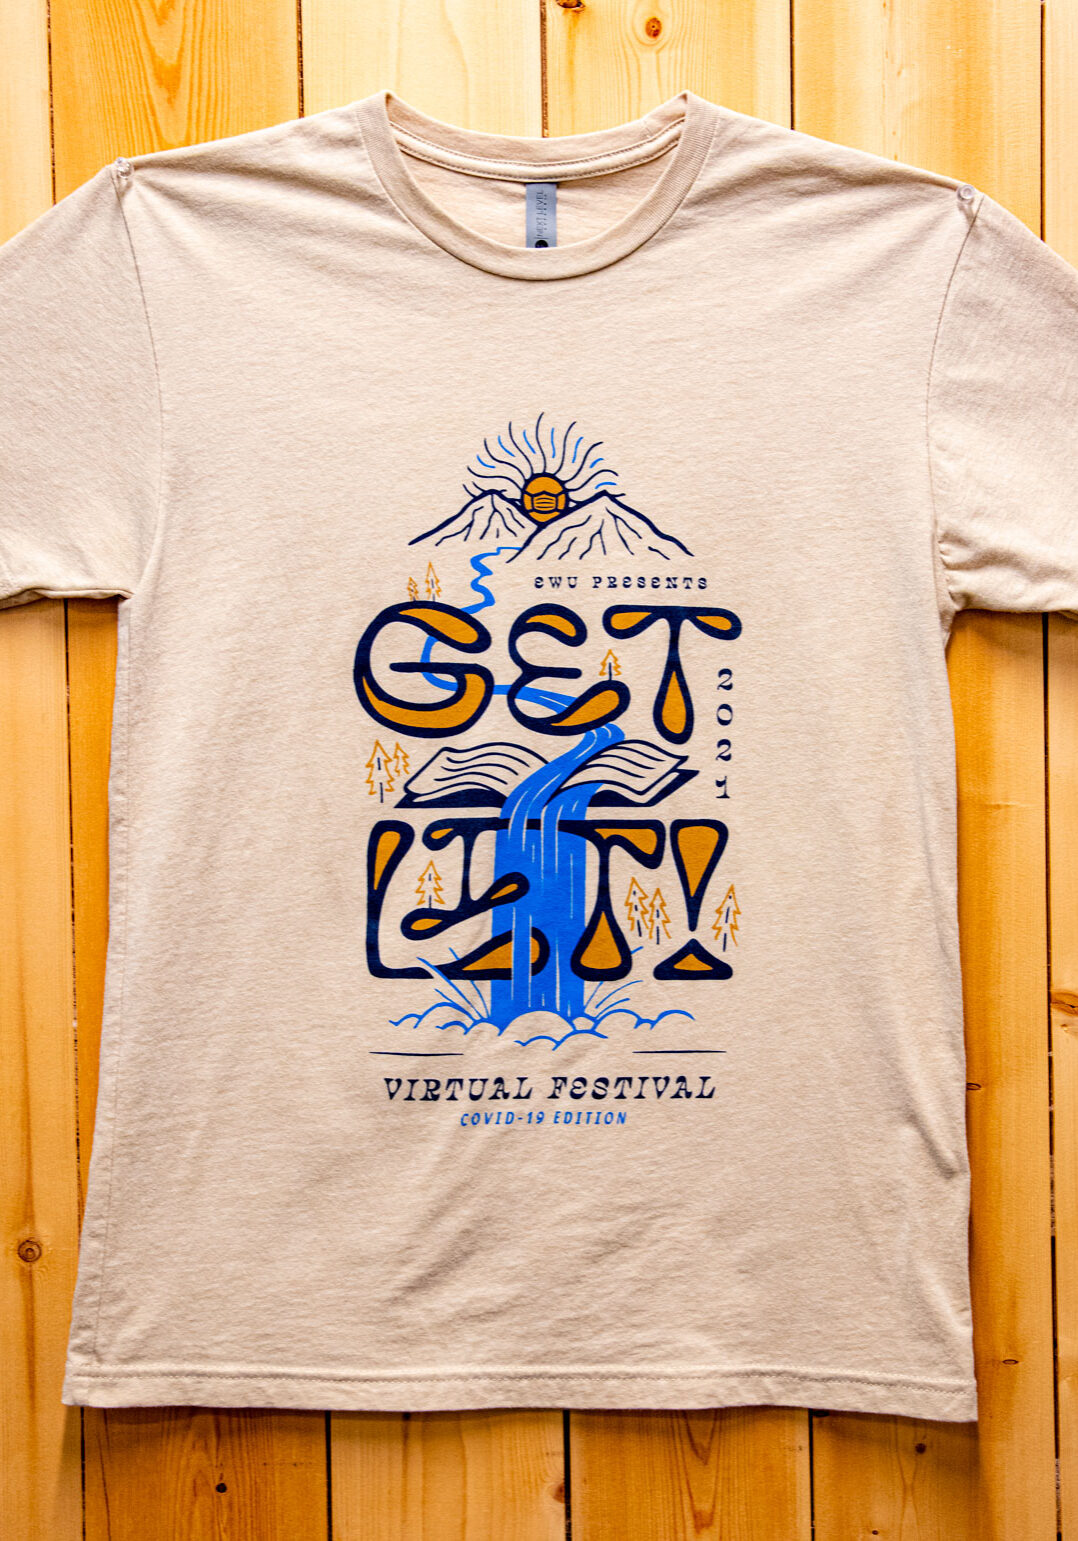 get lit! 2021 festival t-shirt with logo